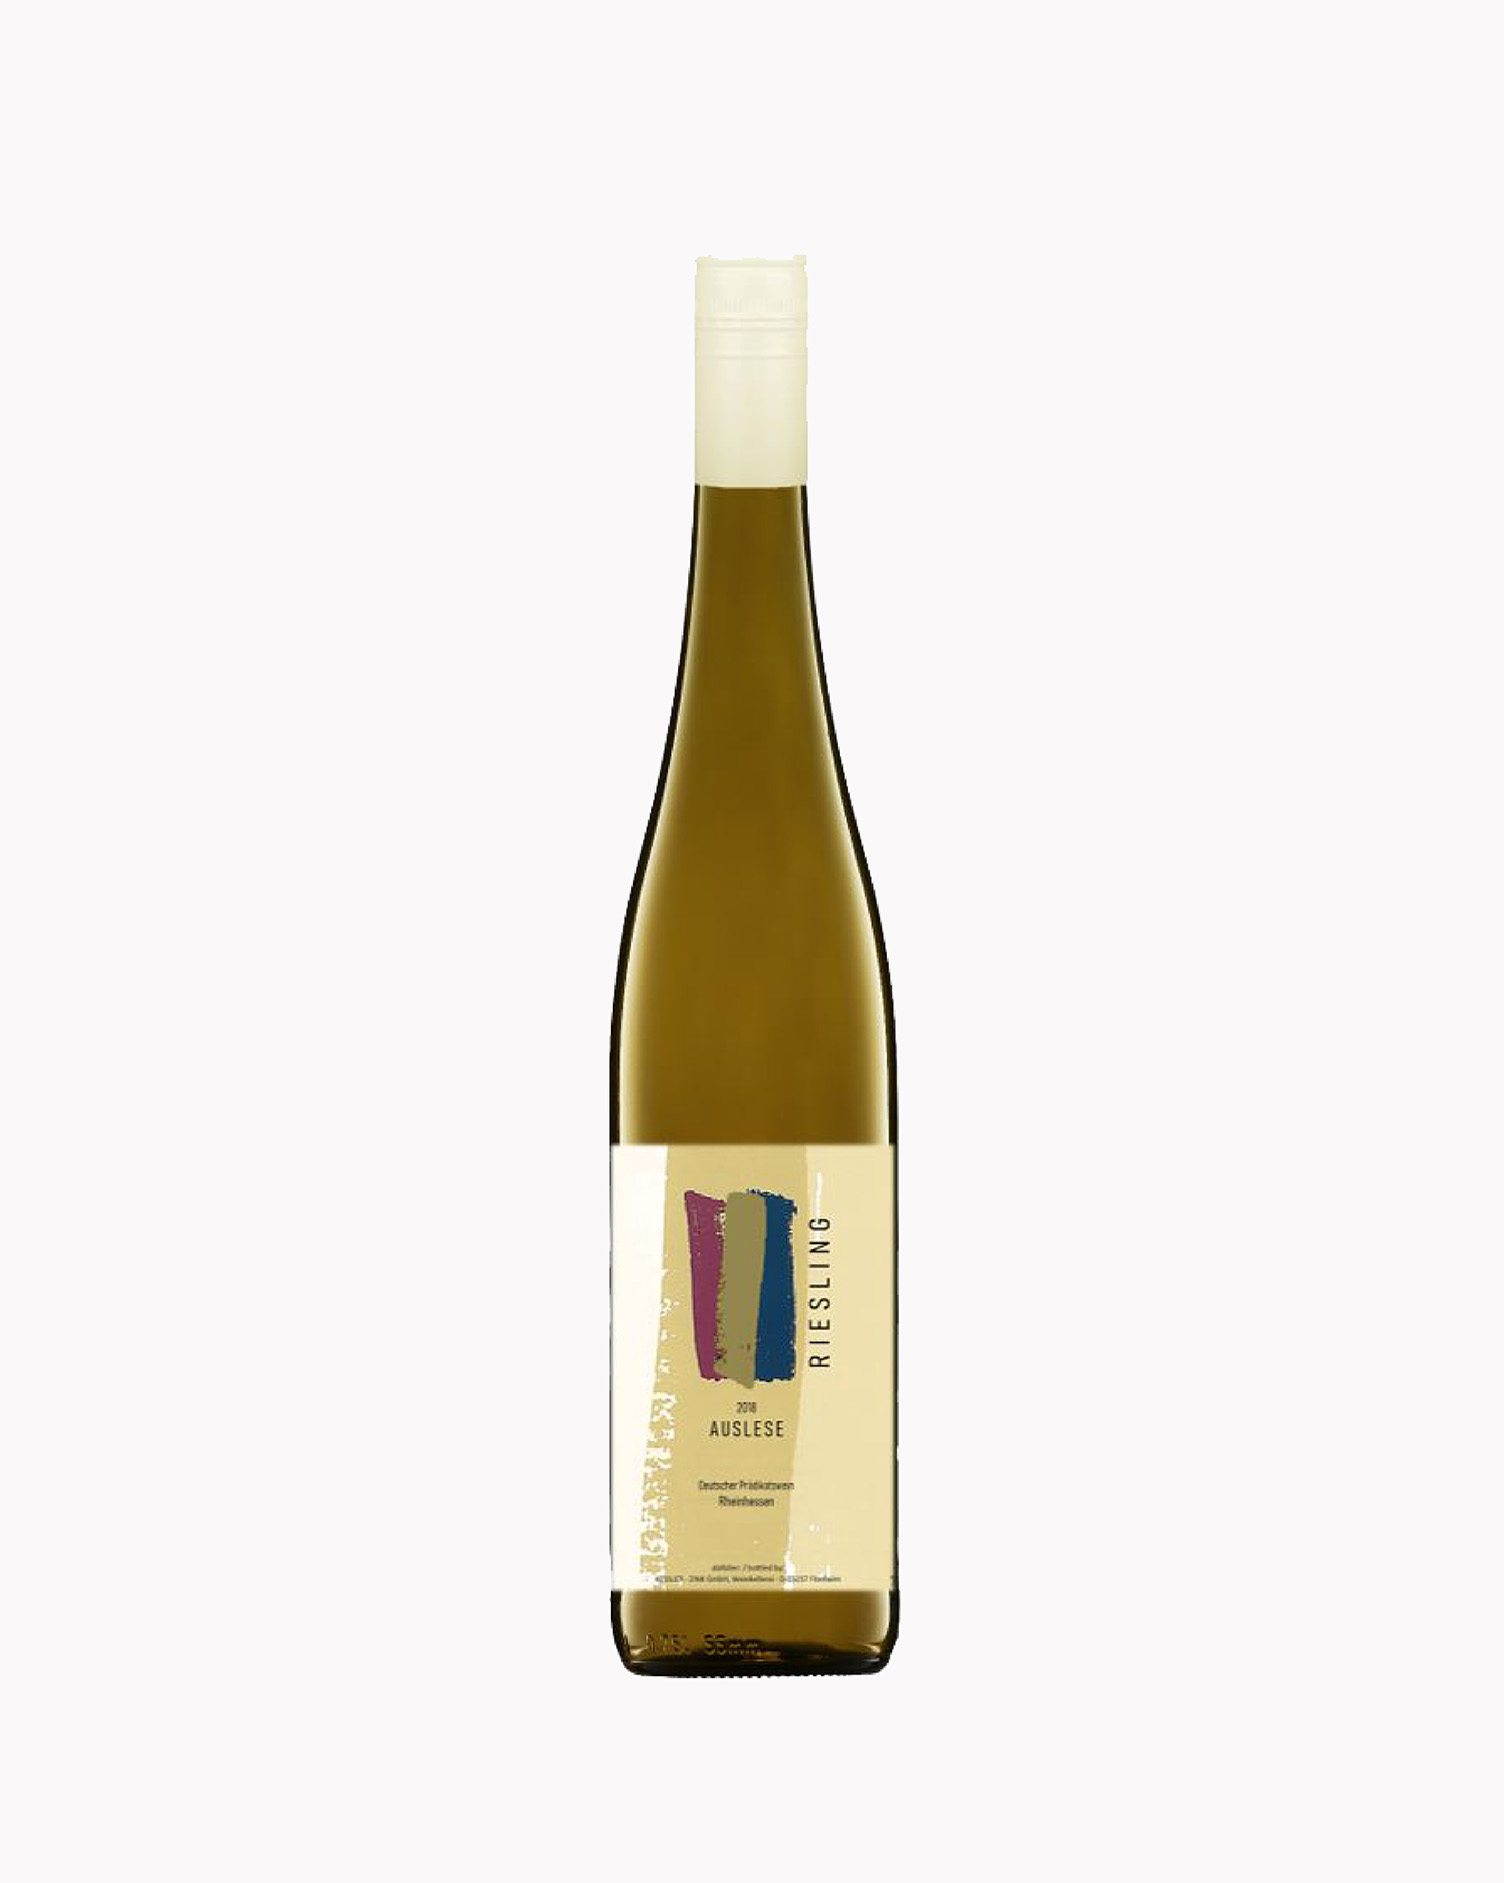 http://www.wineandspice.com.cn/img/2019-08-01-XXuD0b8TaF.jpg